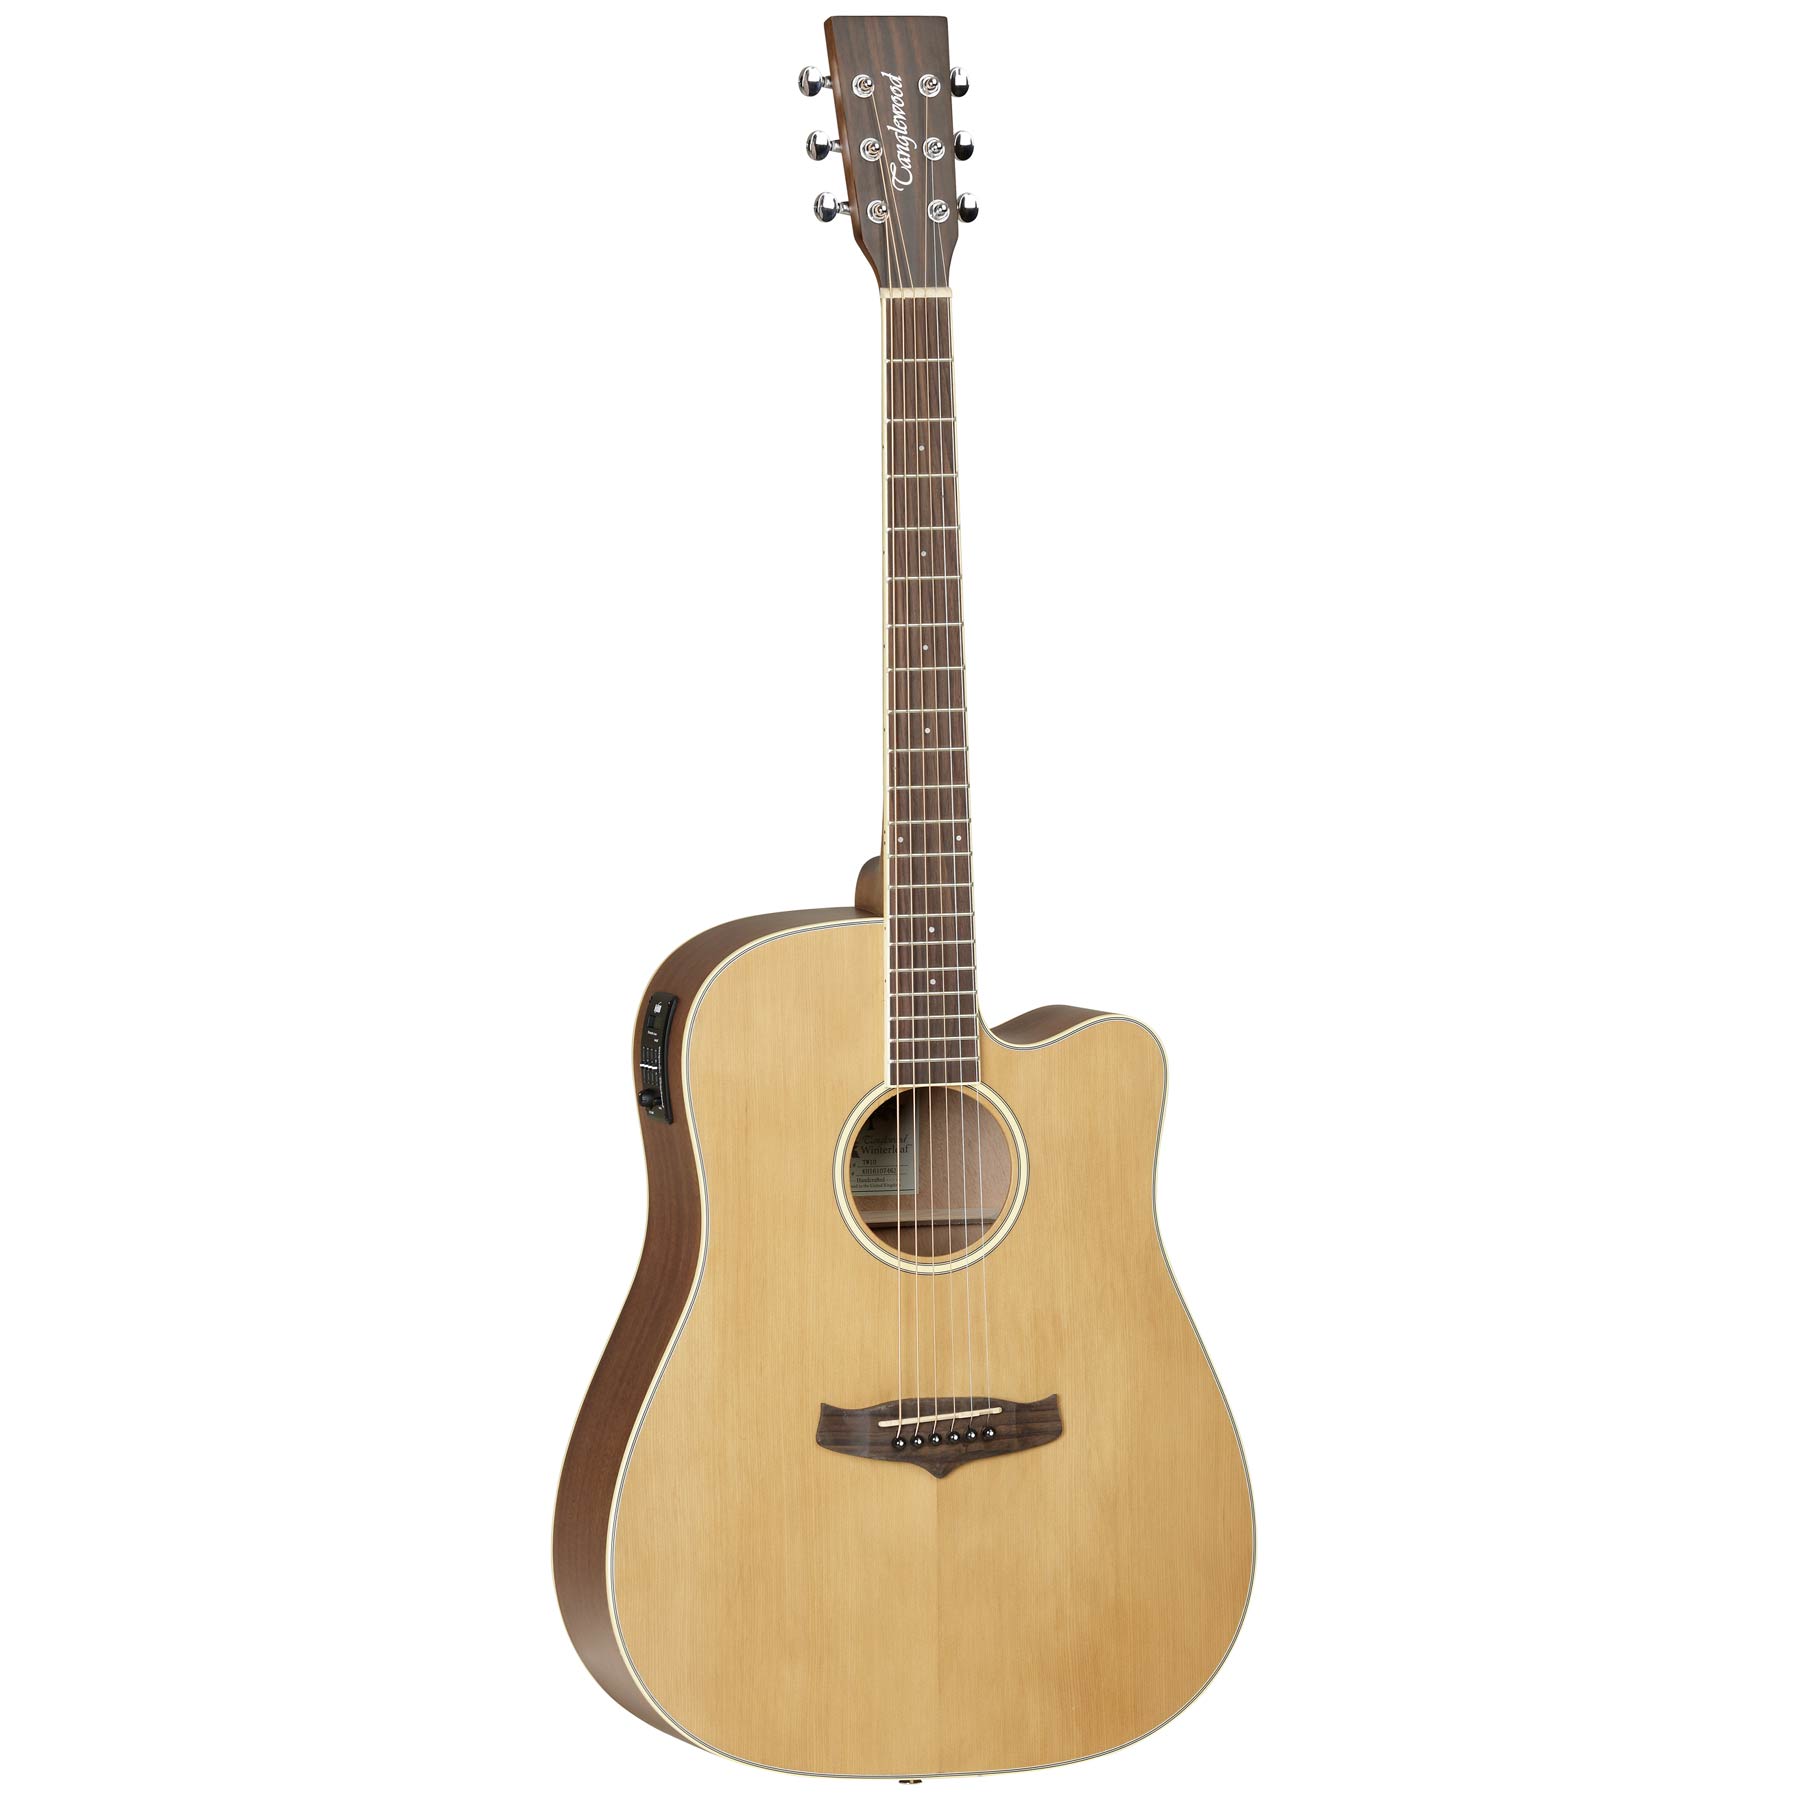 Compra Guitarra Tanglewood con tapa mazica de cedro en Prieto Msica, tu tienda.